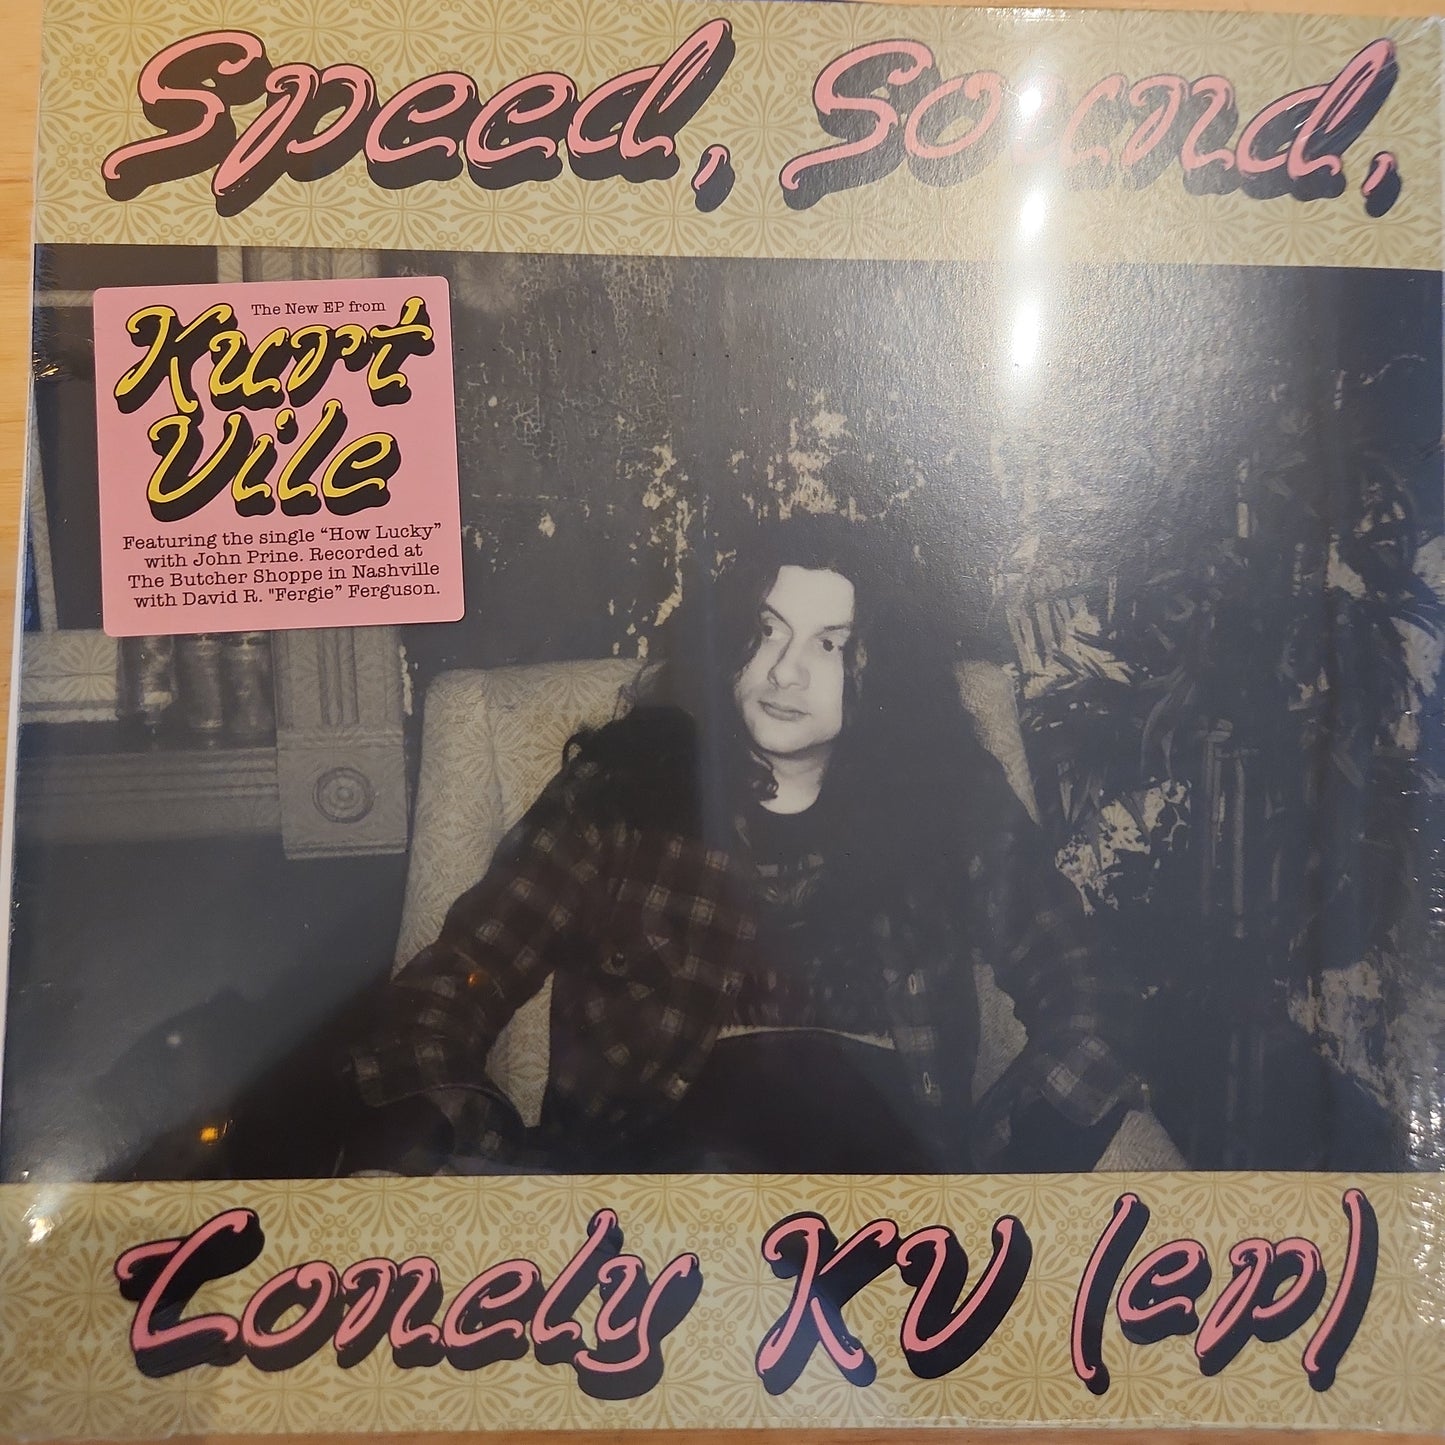 Kurt Vile - Speed, Sound, Lonely KV - Vinyl EP